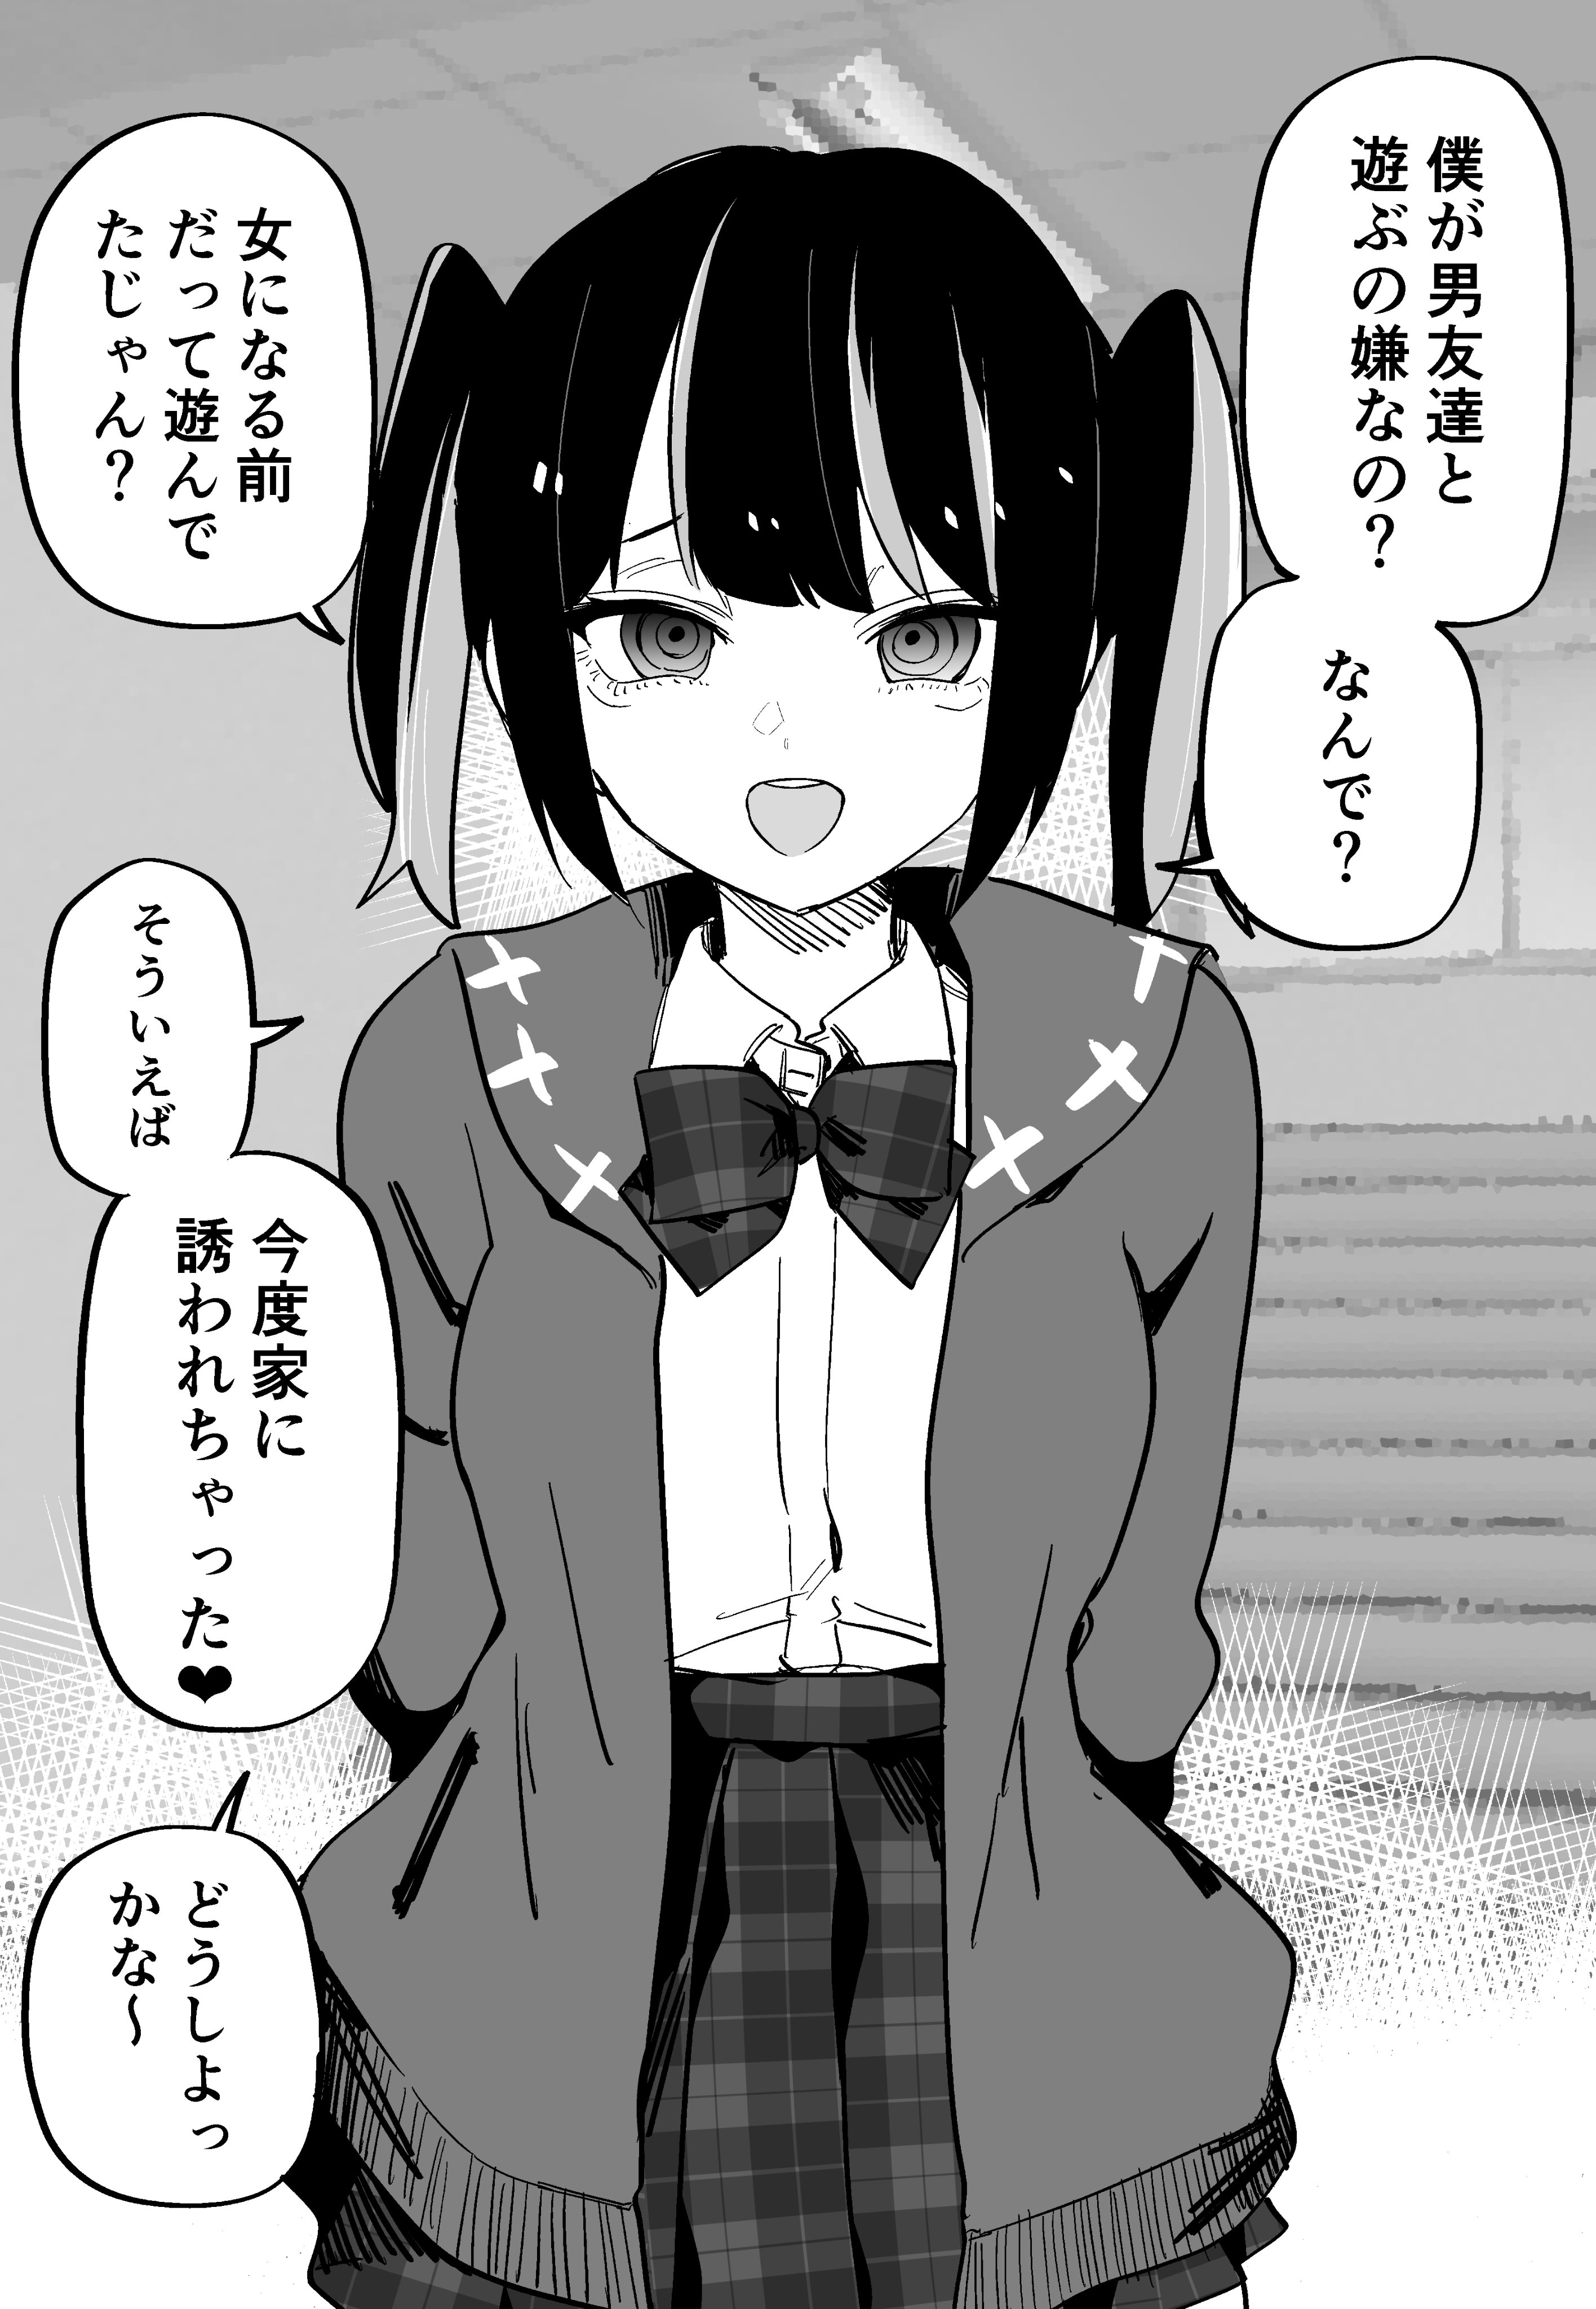 japanese language - What is the disease called Tsurarekia (ツラレキア)? -  Anime & Manga Stack Exchange